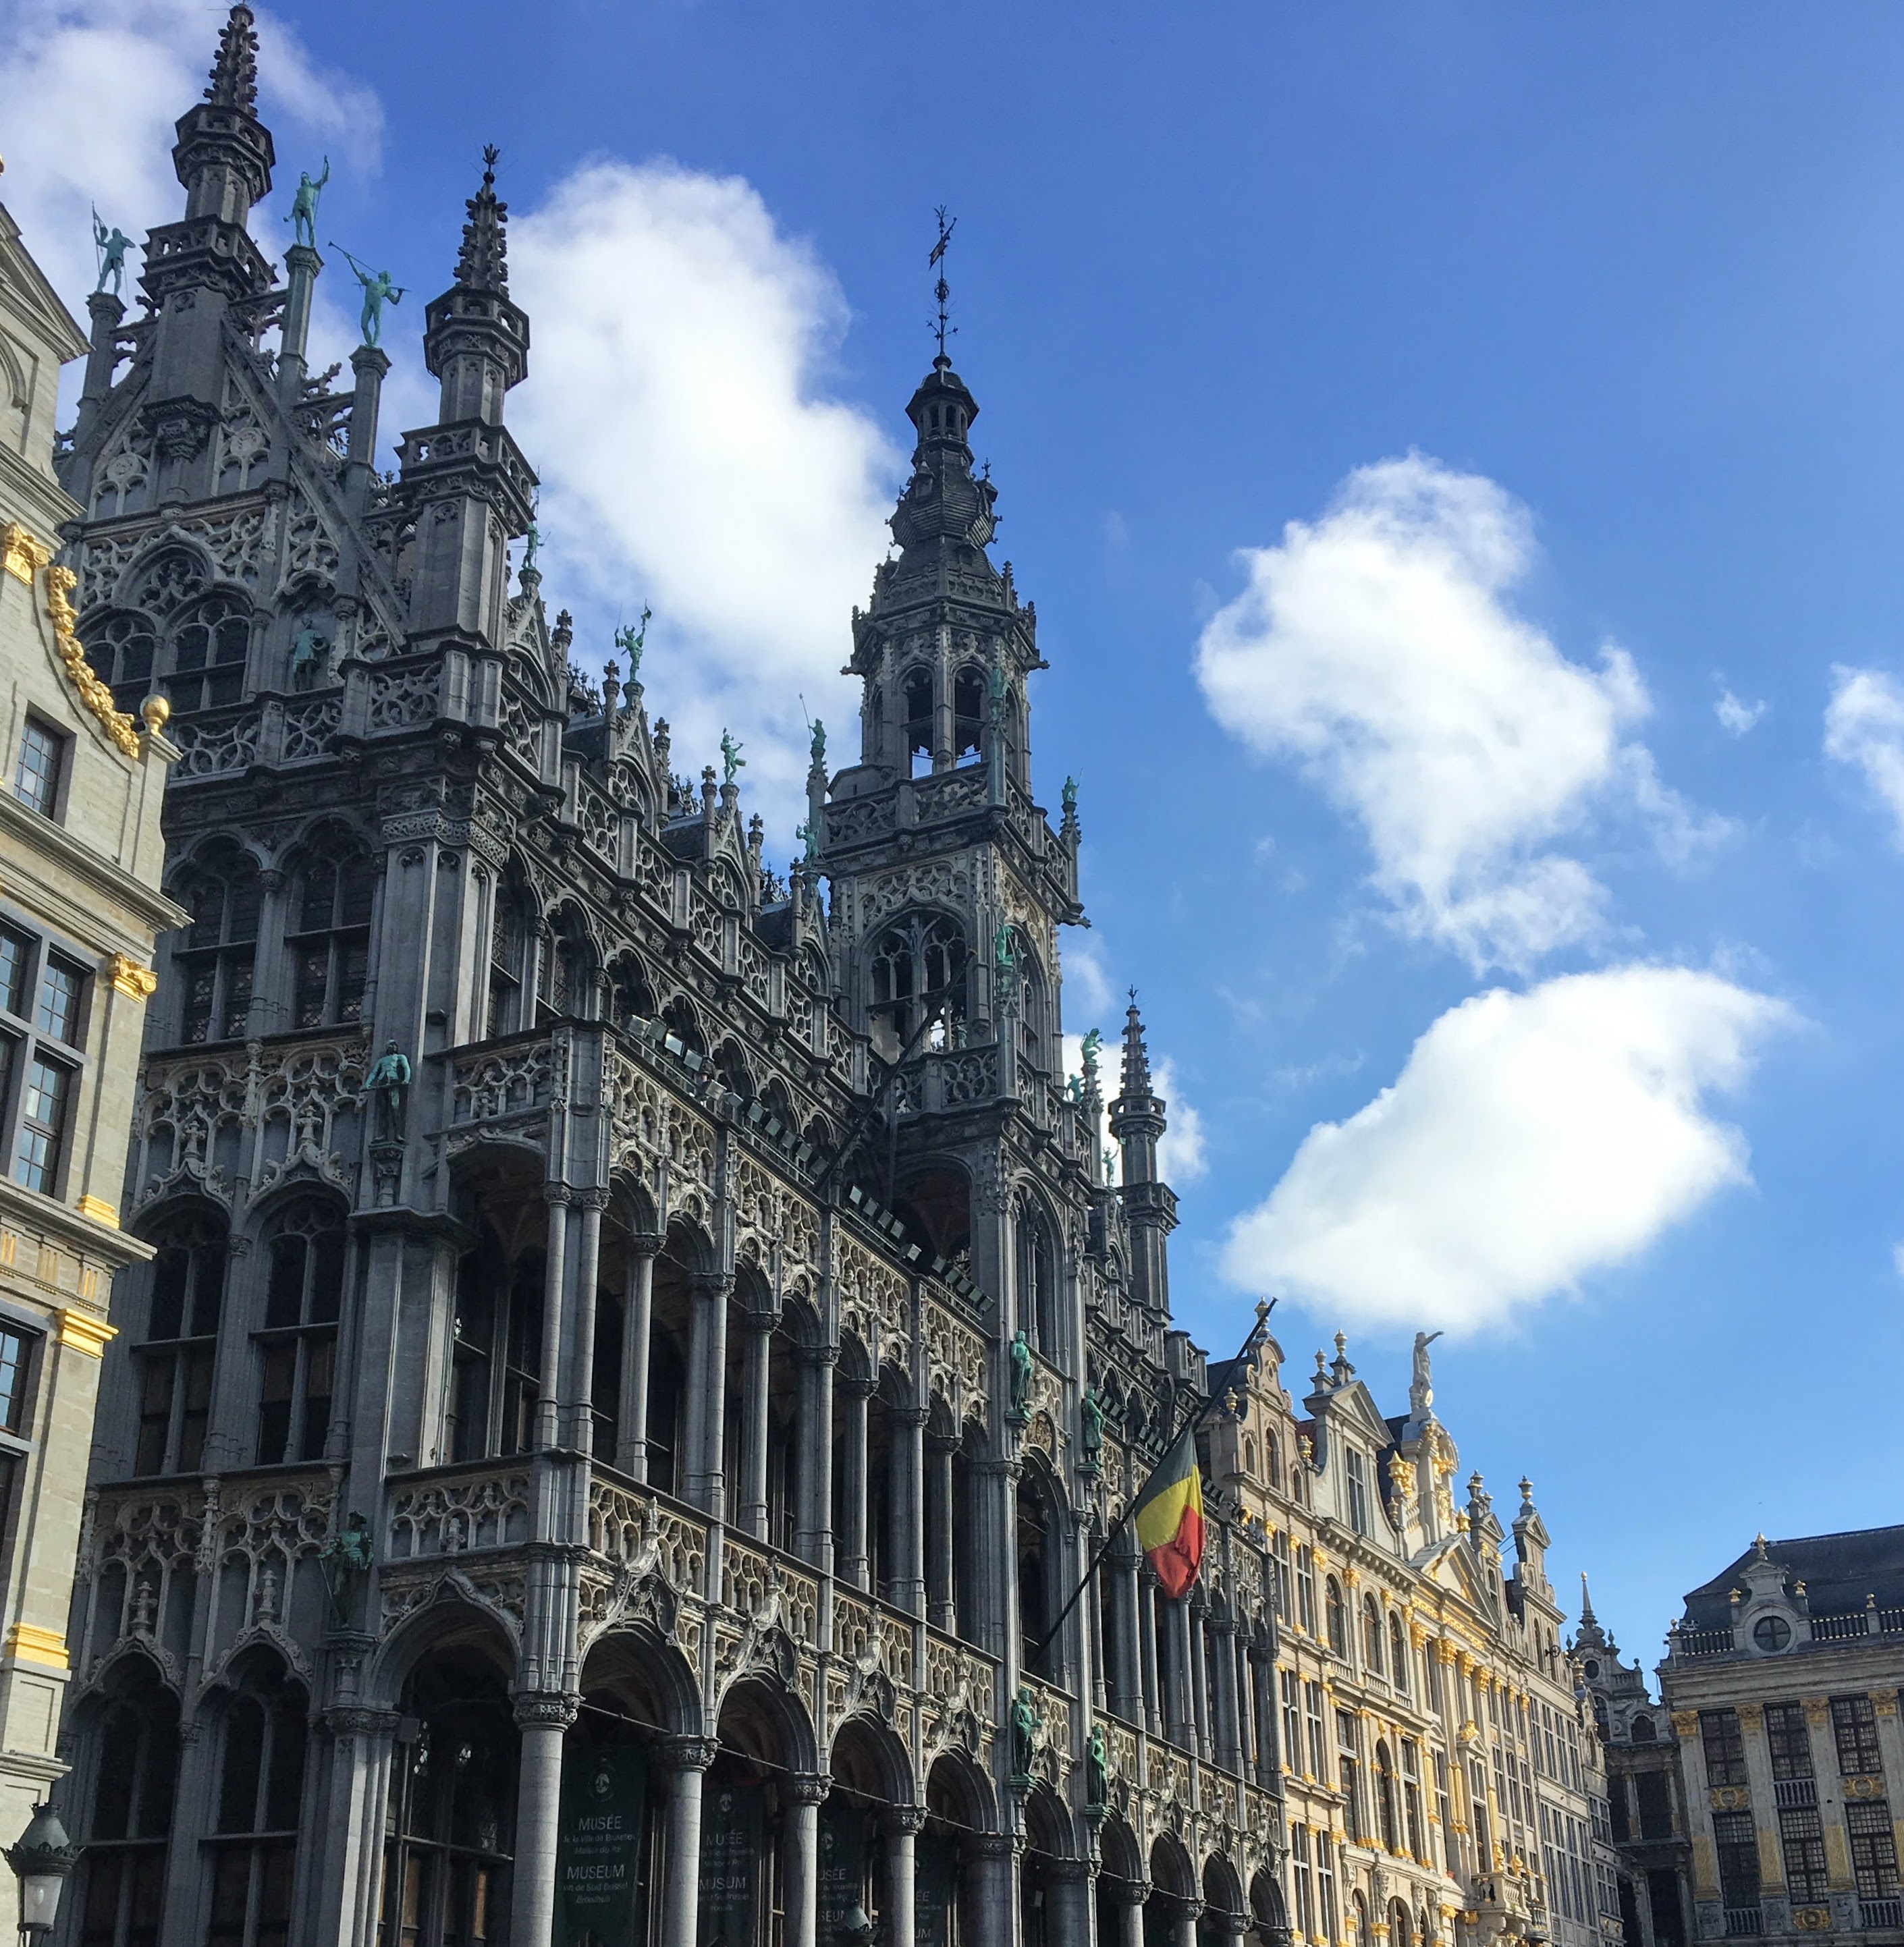 Grand Place in Brussels, Belgium